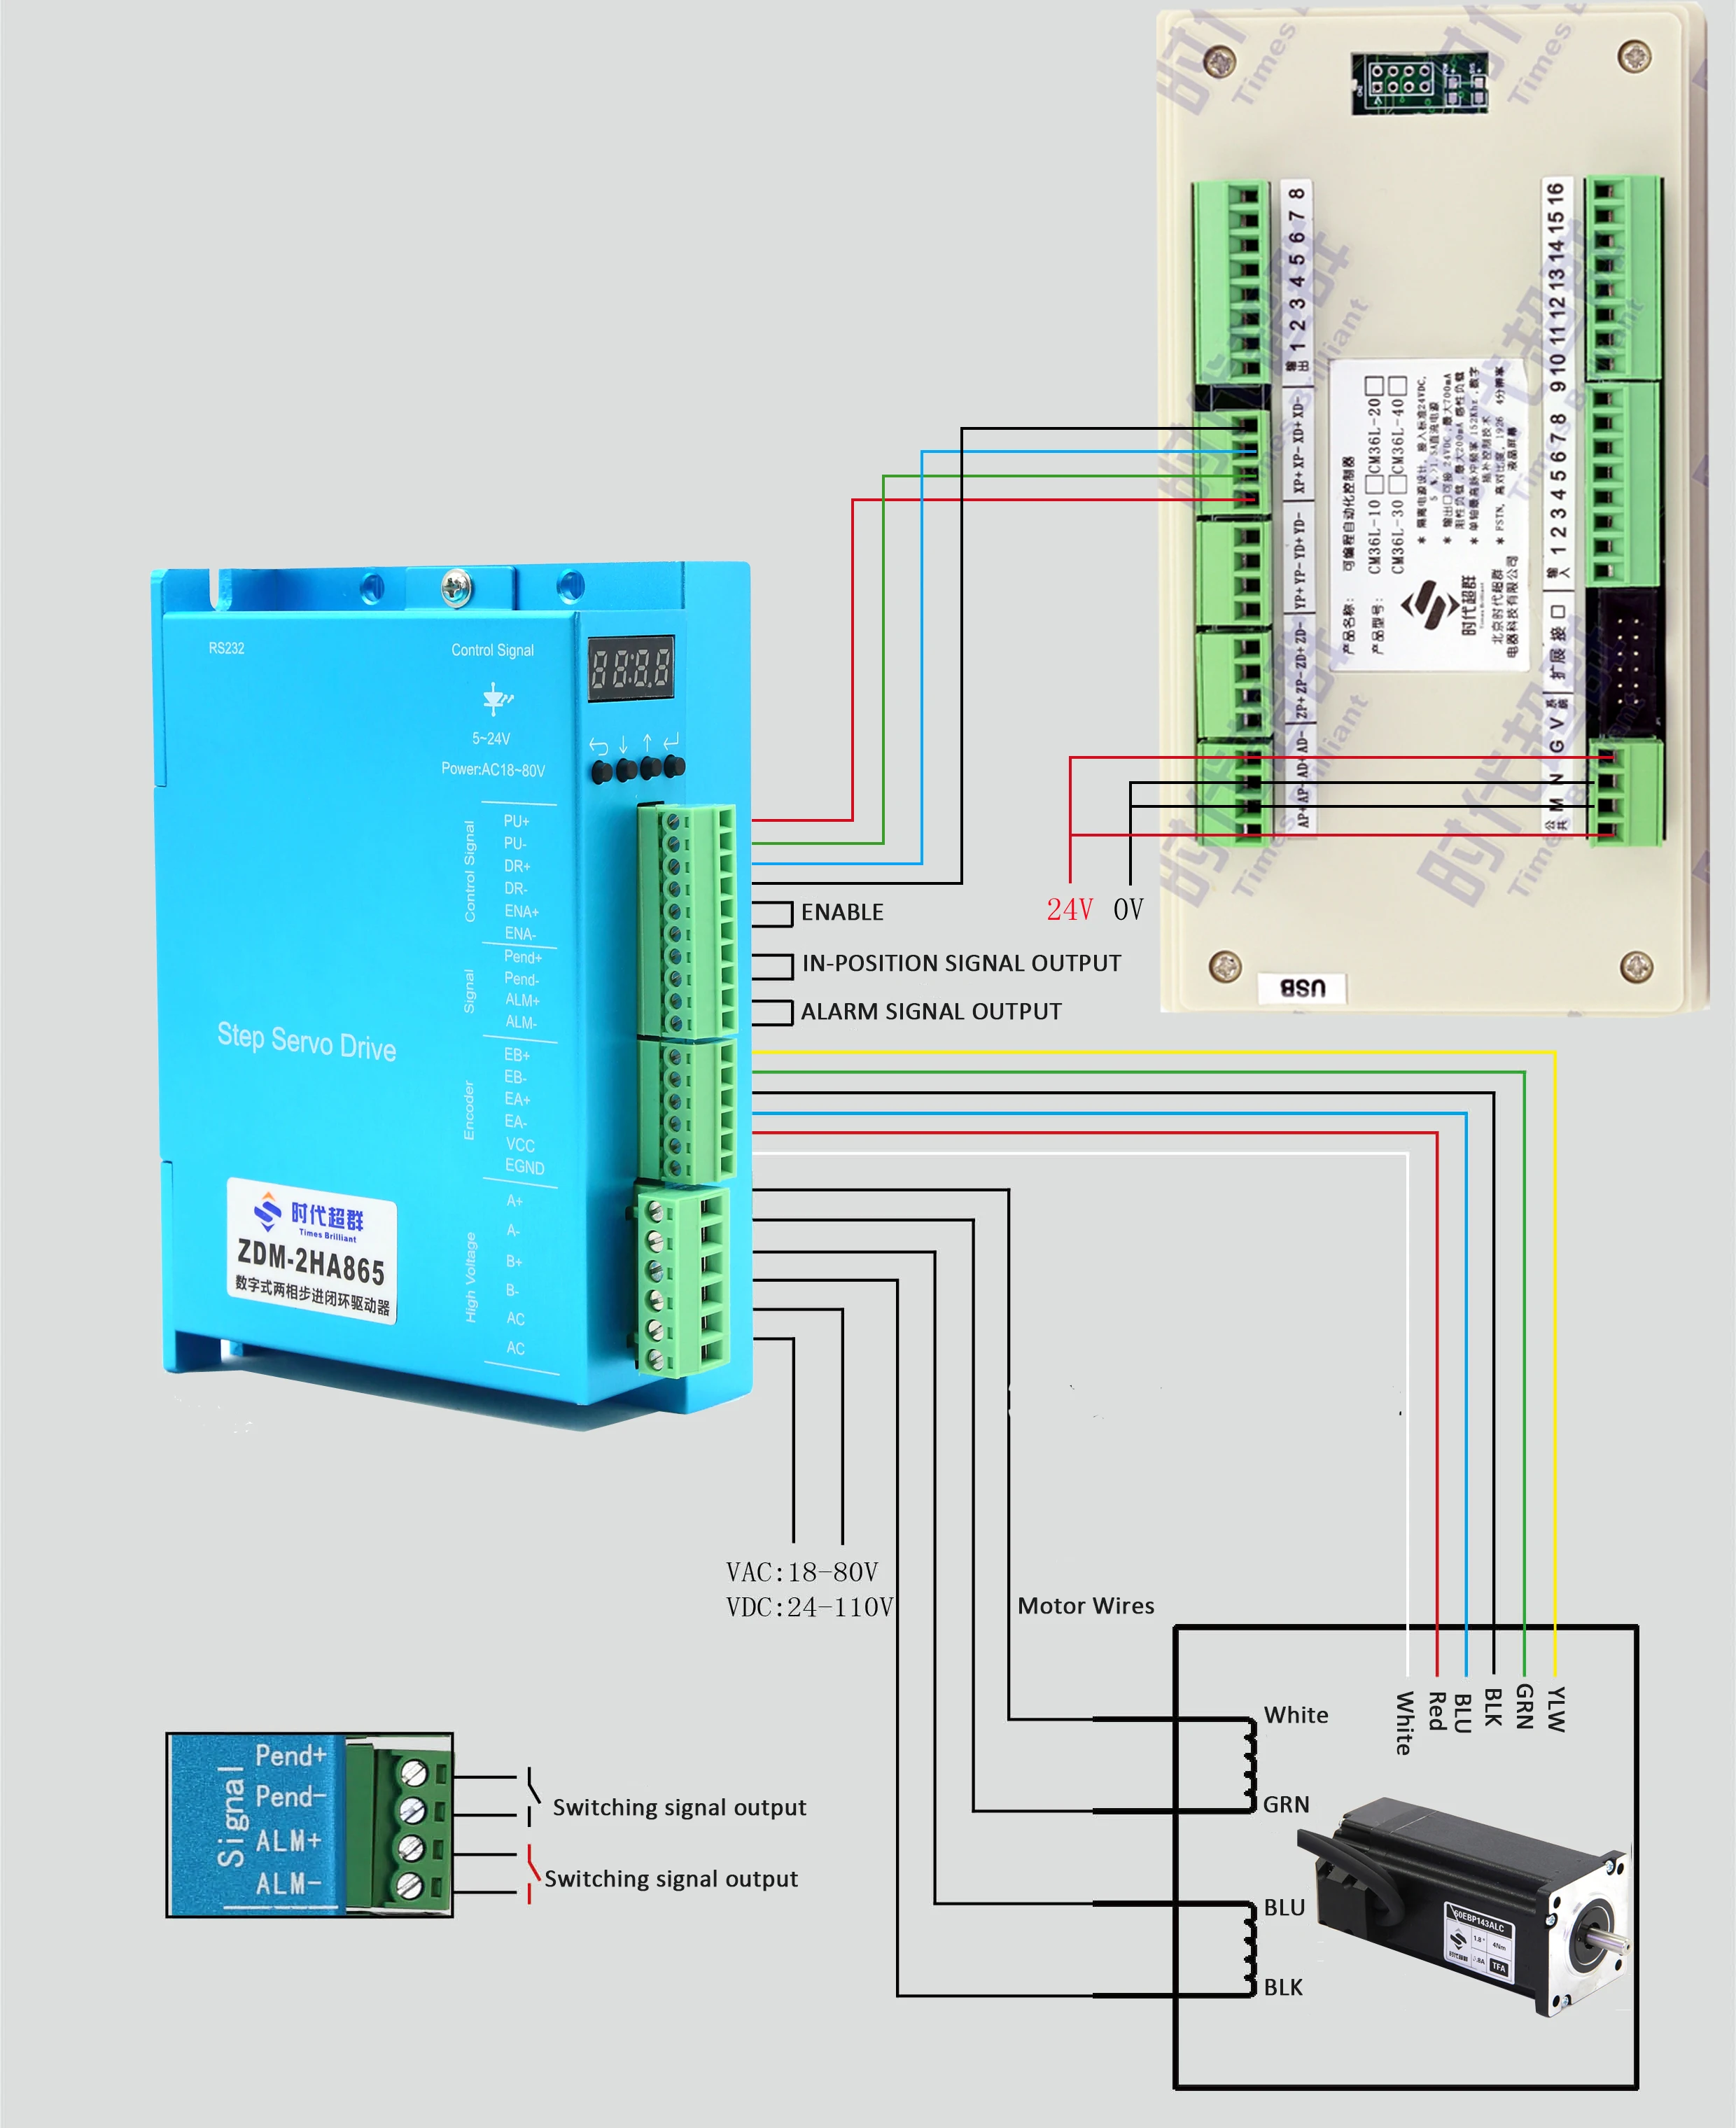 ZDM-2HA865 wiring